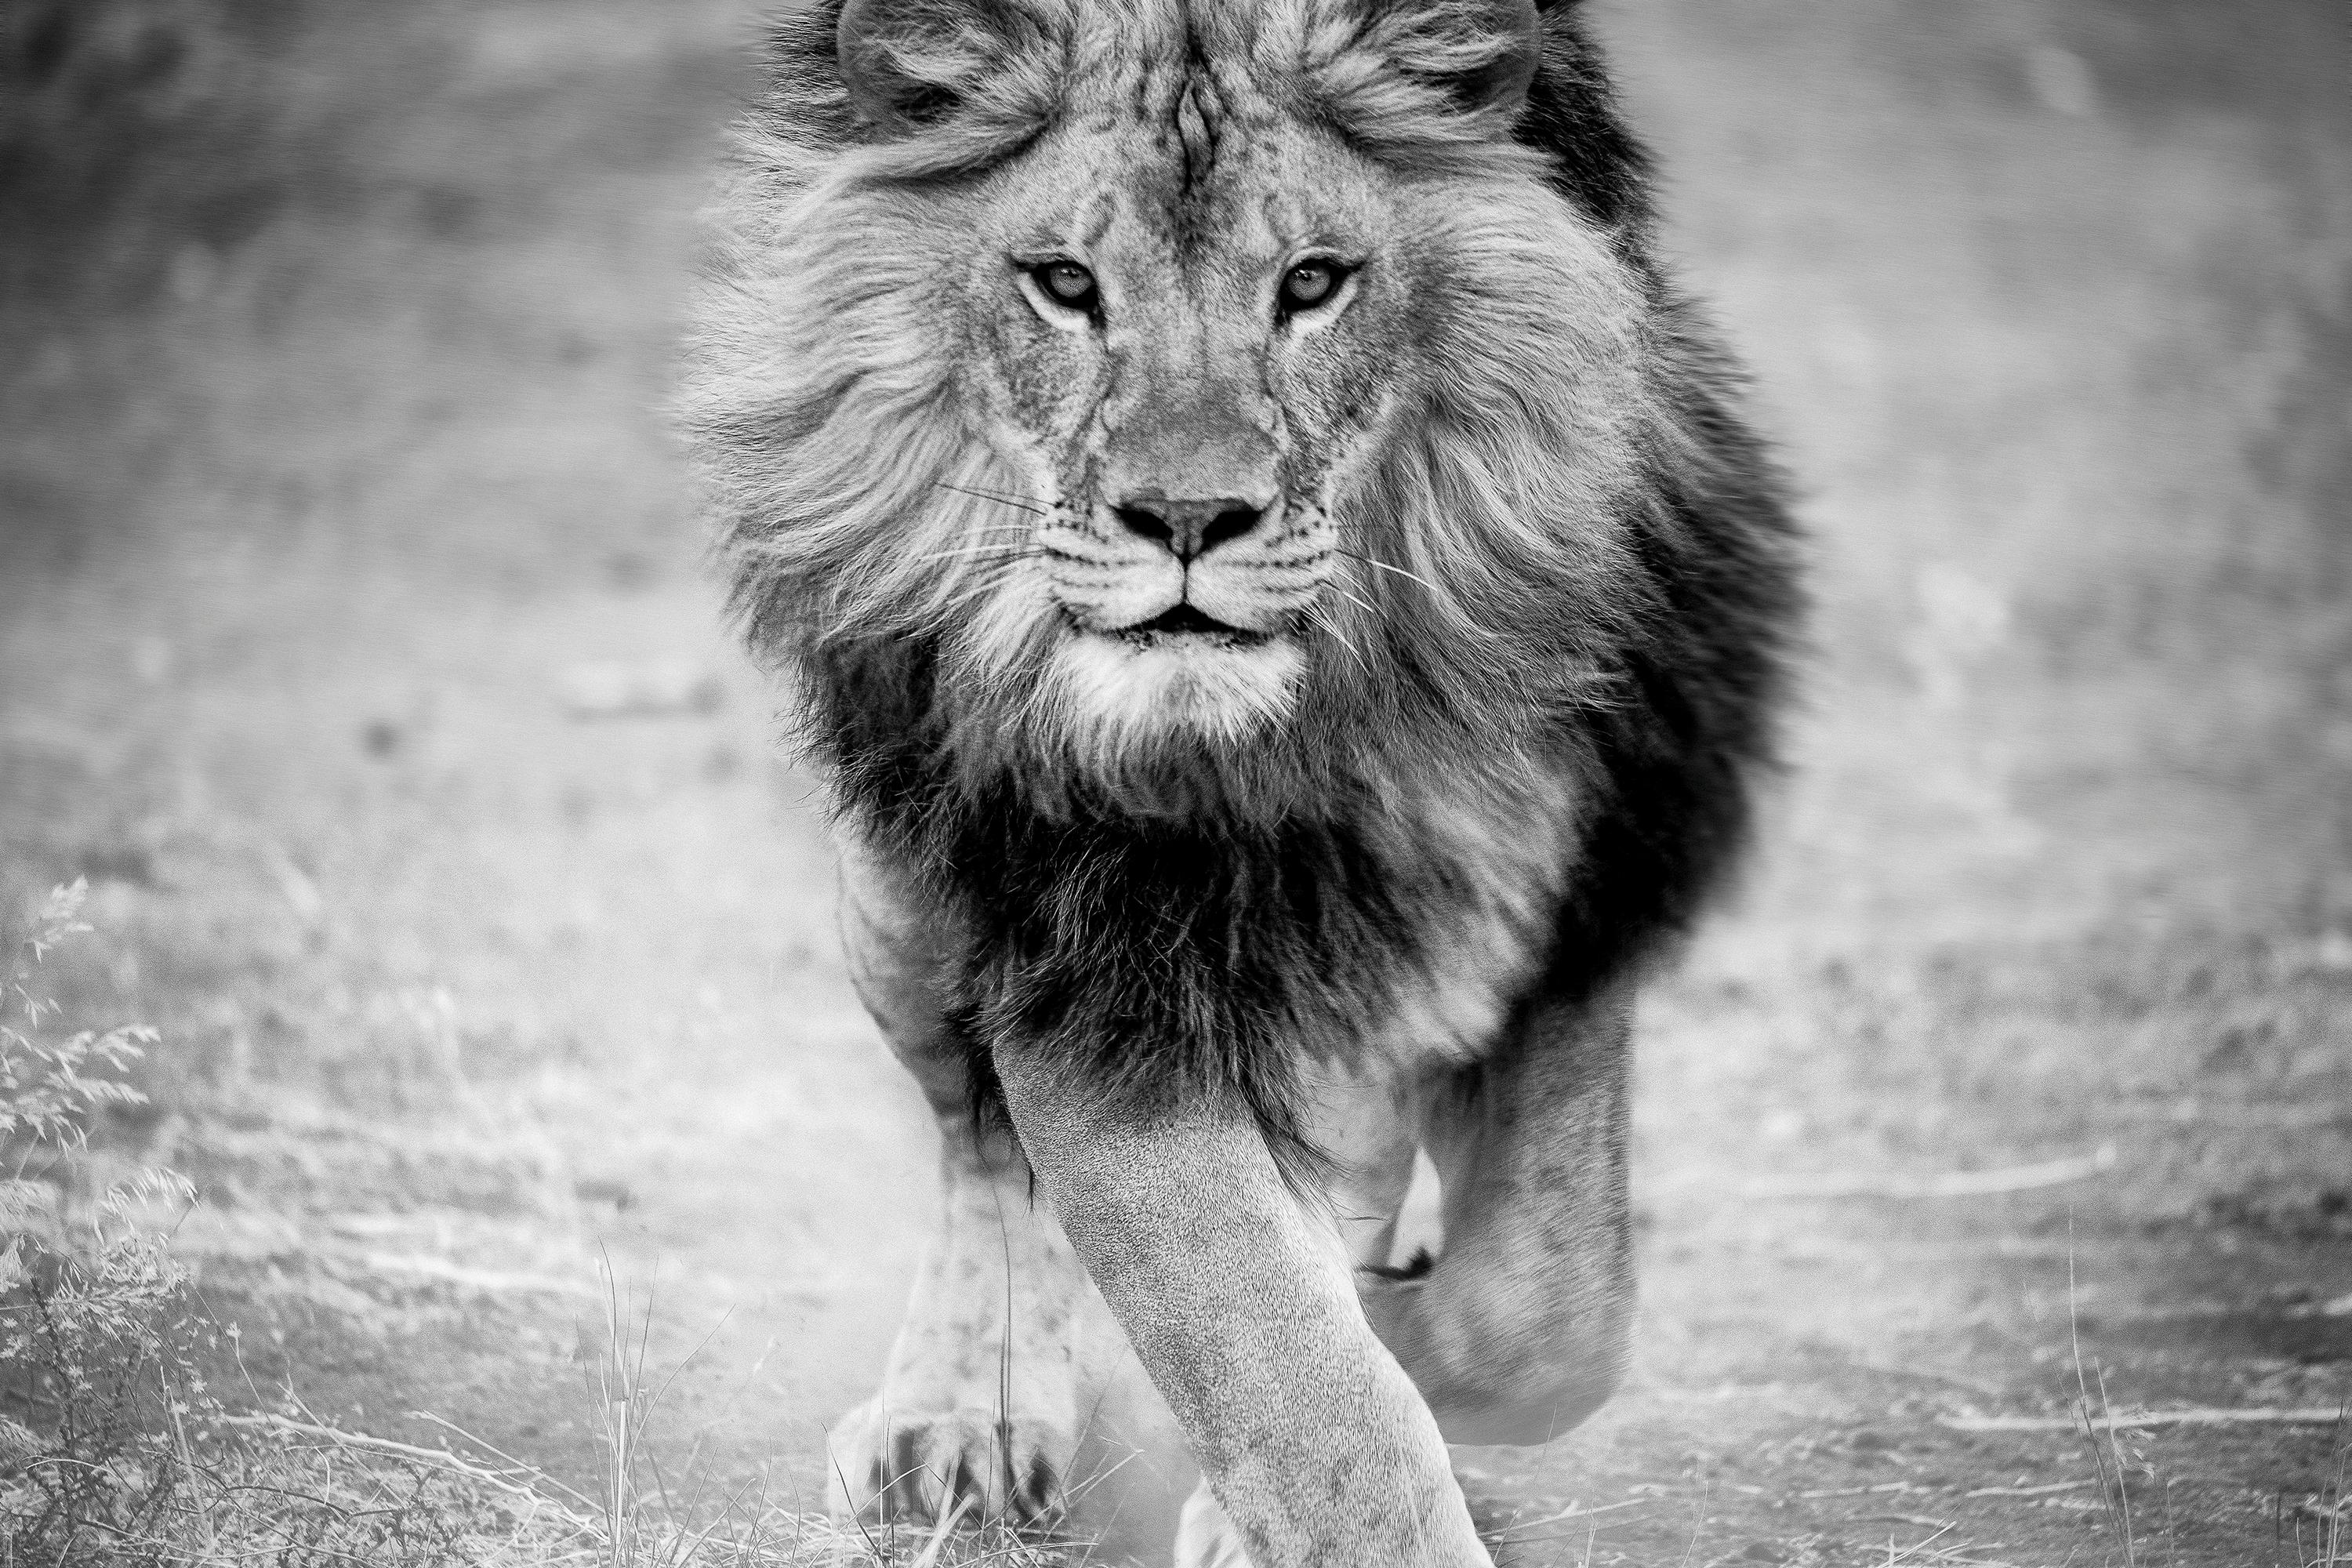 Shane Russeck Black and White Photograph -  "Panthera Leo" 36x48 Black and White Lion Photography Photograph Fine Art Print